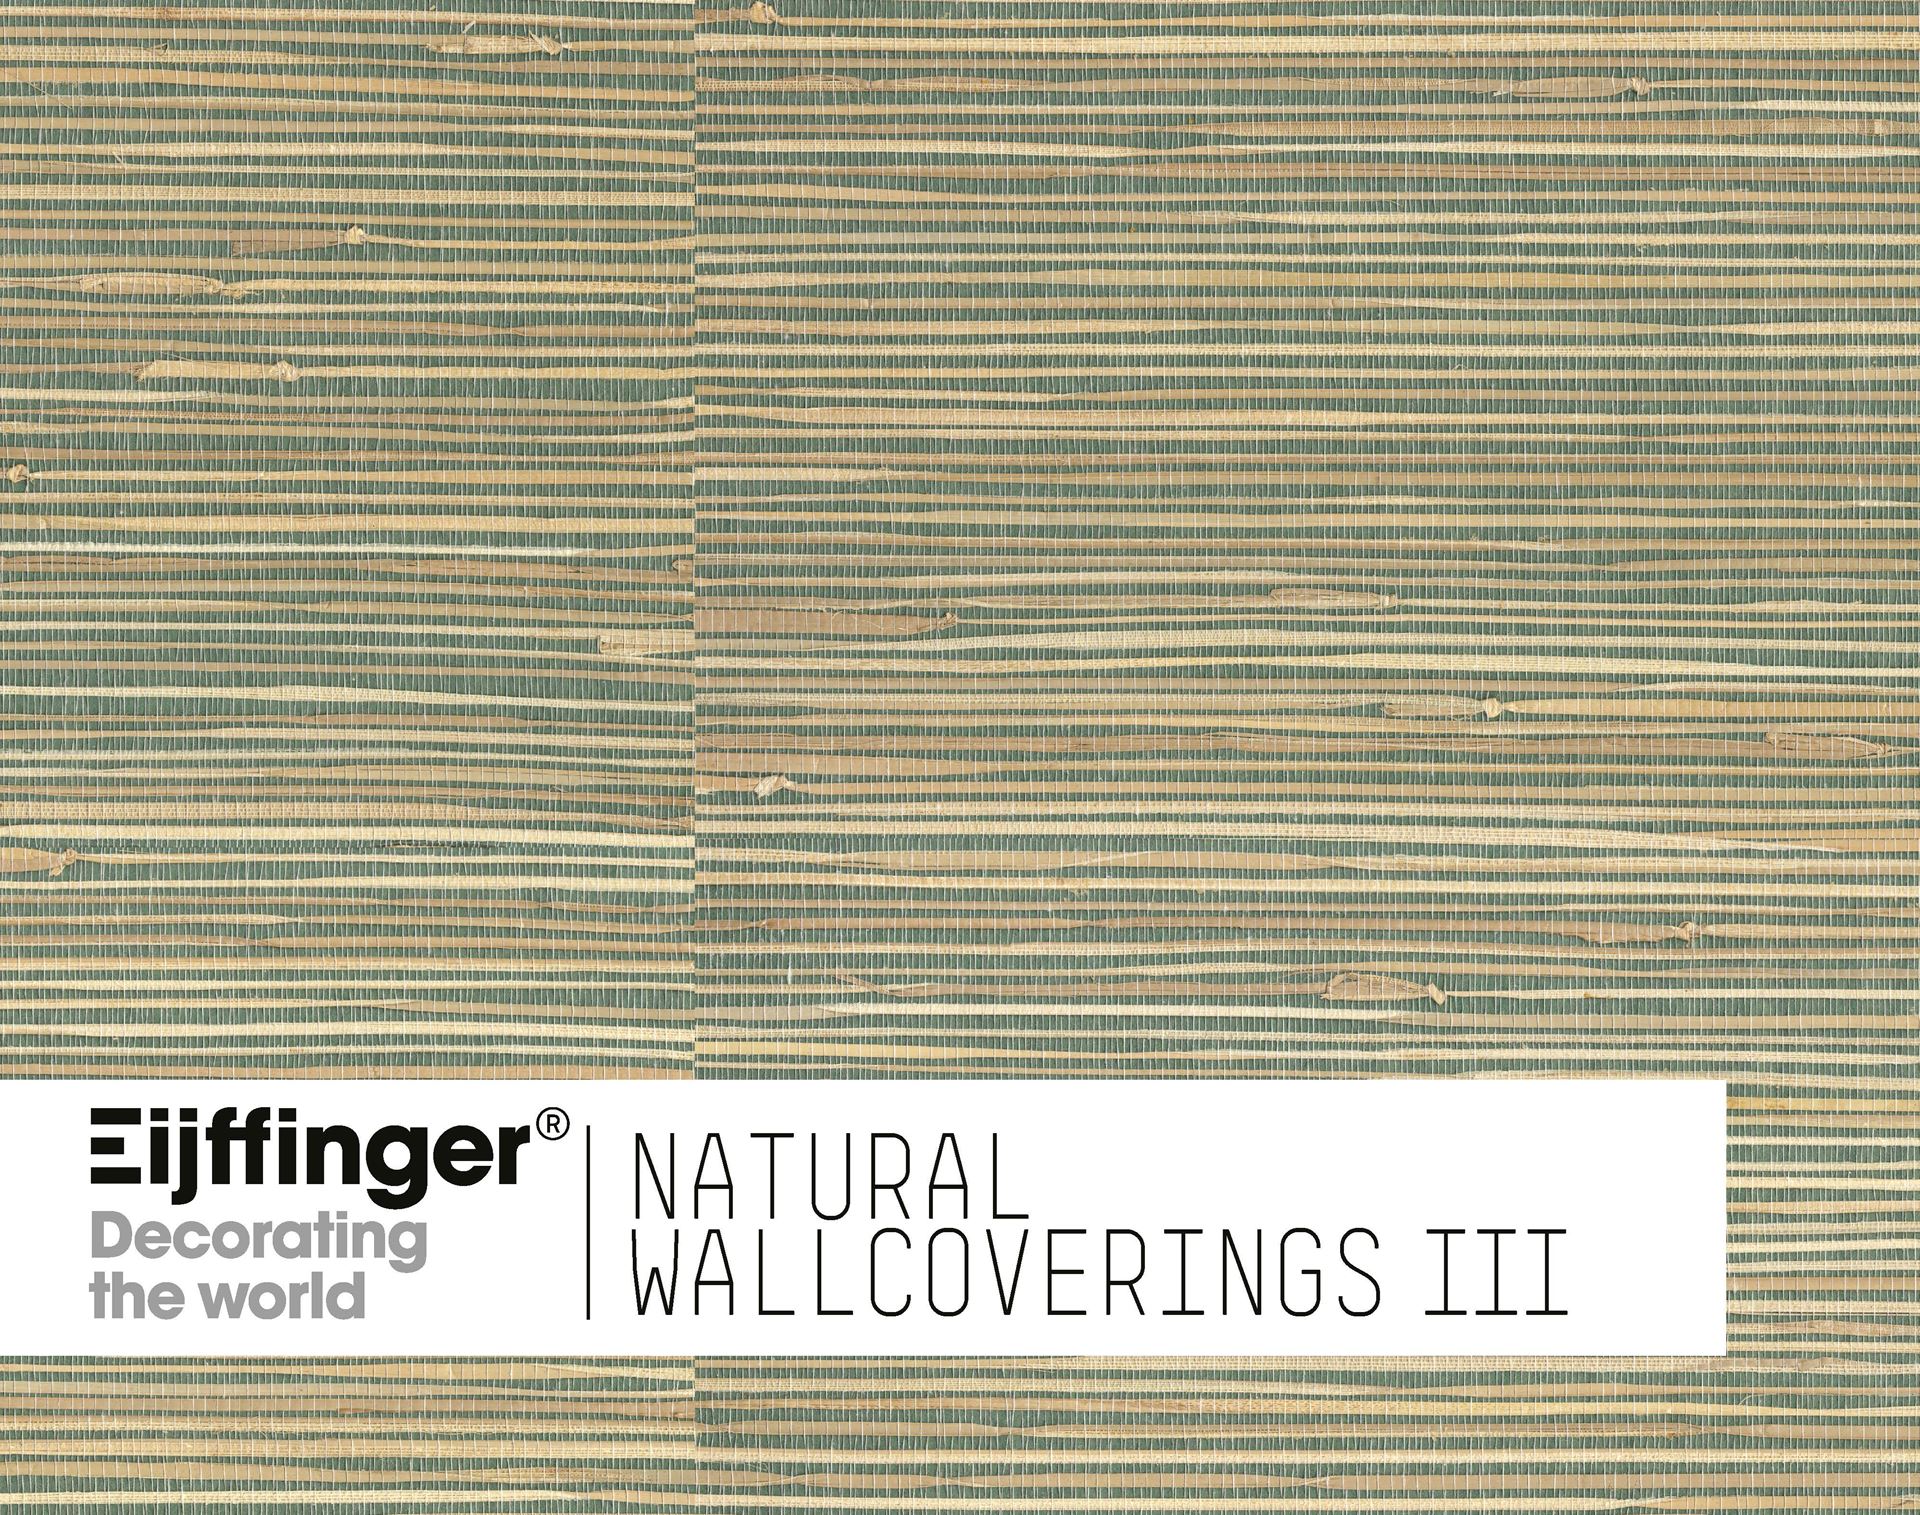 Wallpaper - Natural Wallcoverings III - Eijffinger